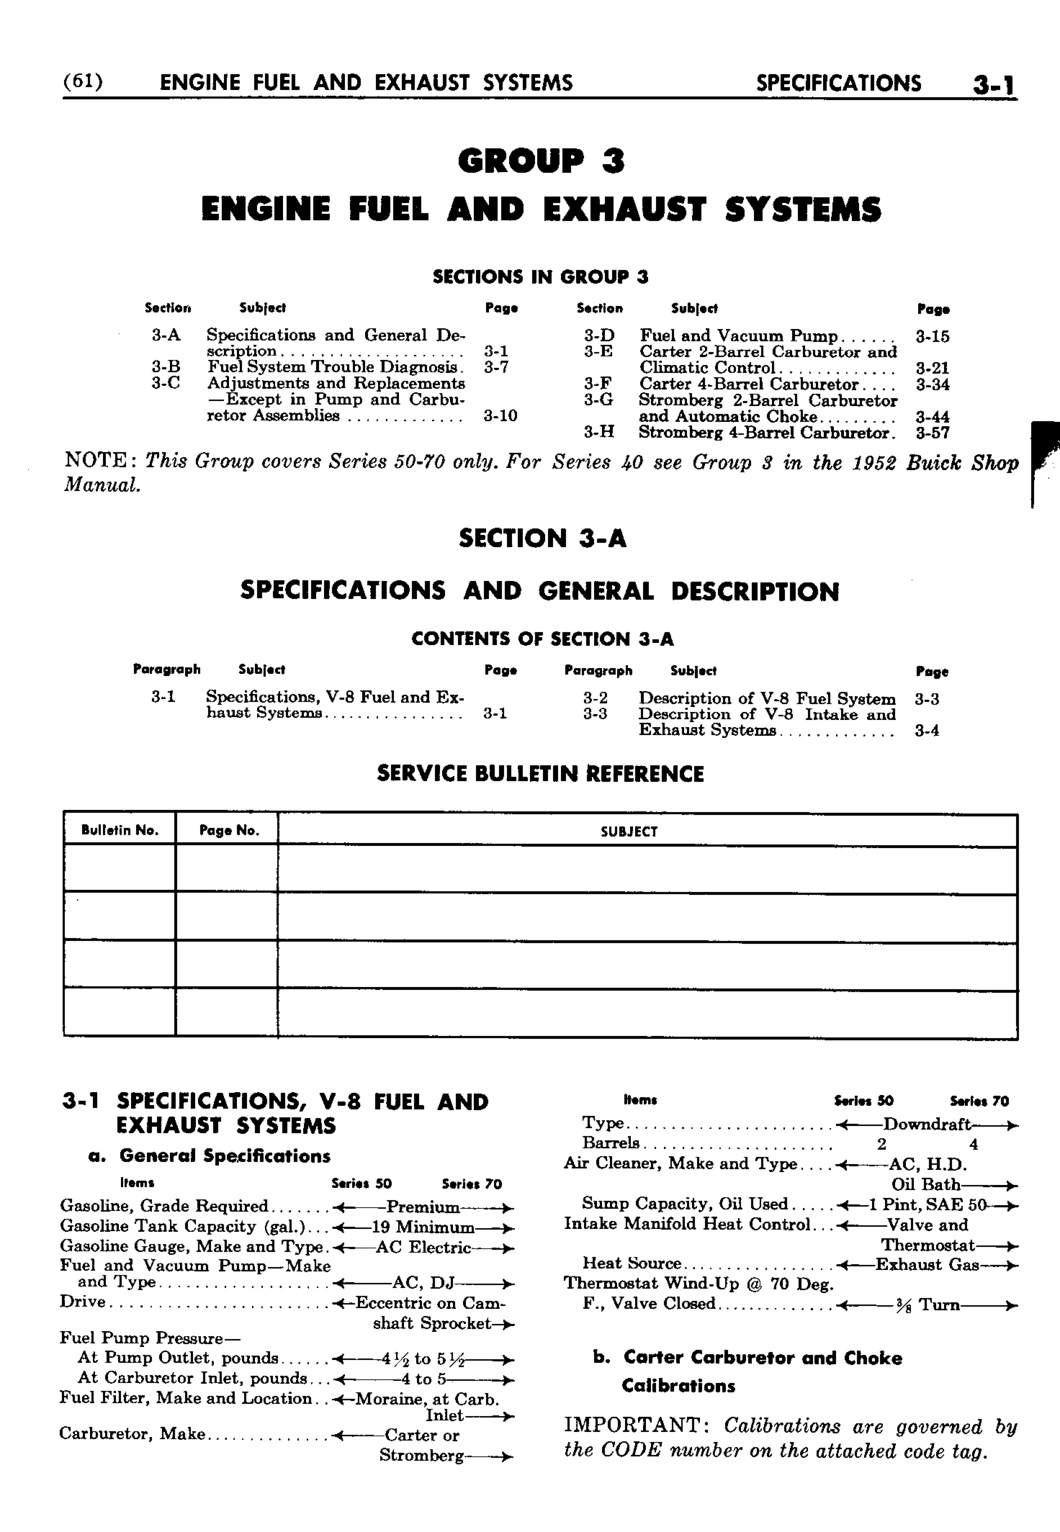 n_04 1953 Buick Shop Manual - Engine Fuel & Exhaust-001-001.jpg